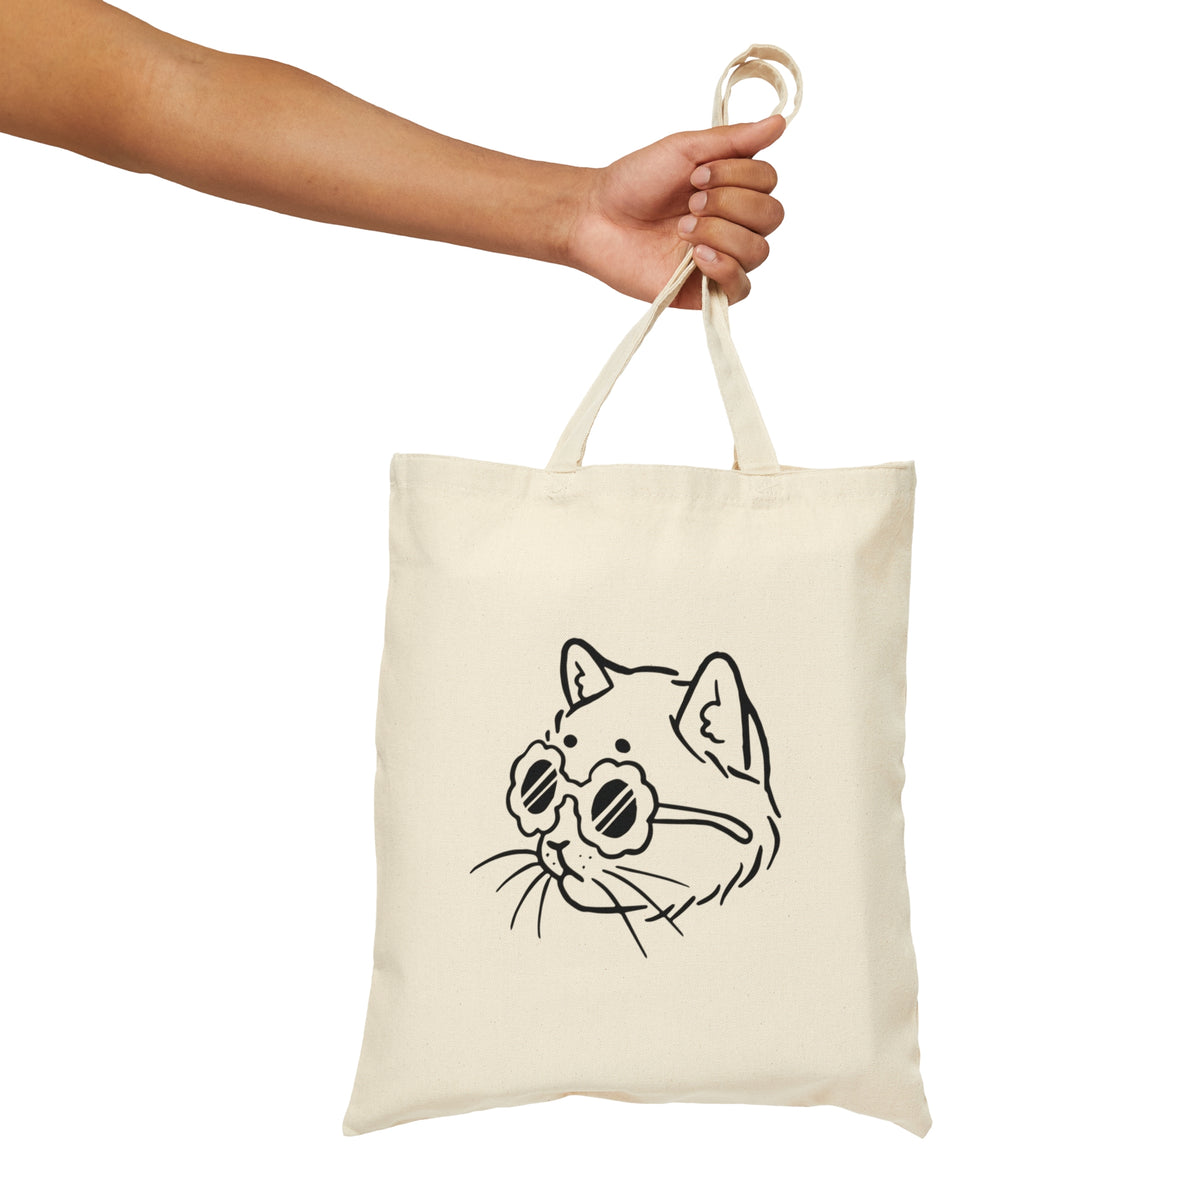 Cool Cat Cotton Canvas Tote Bag